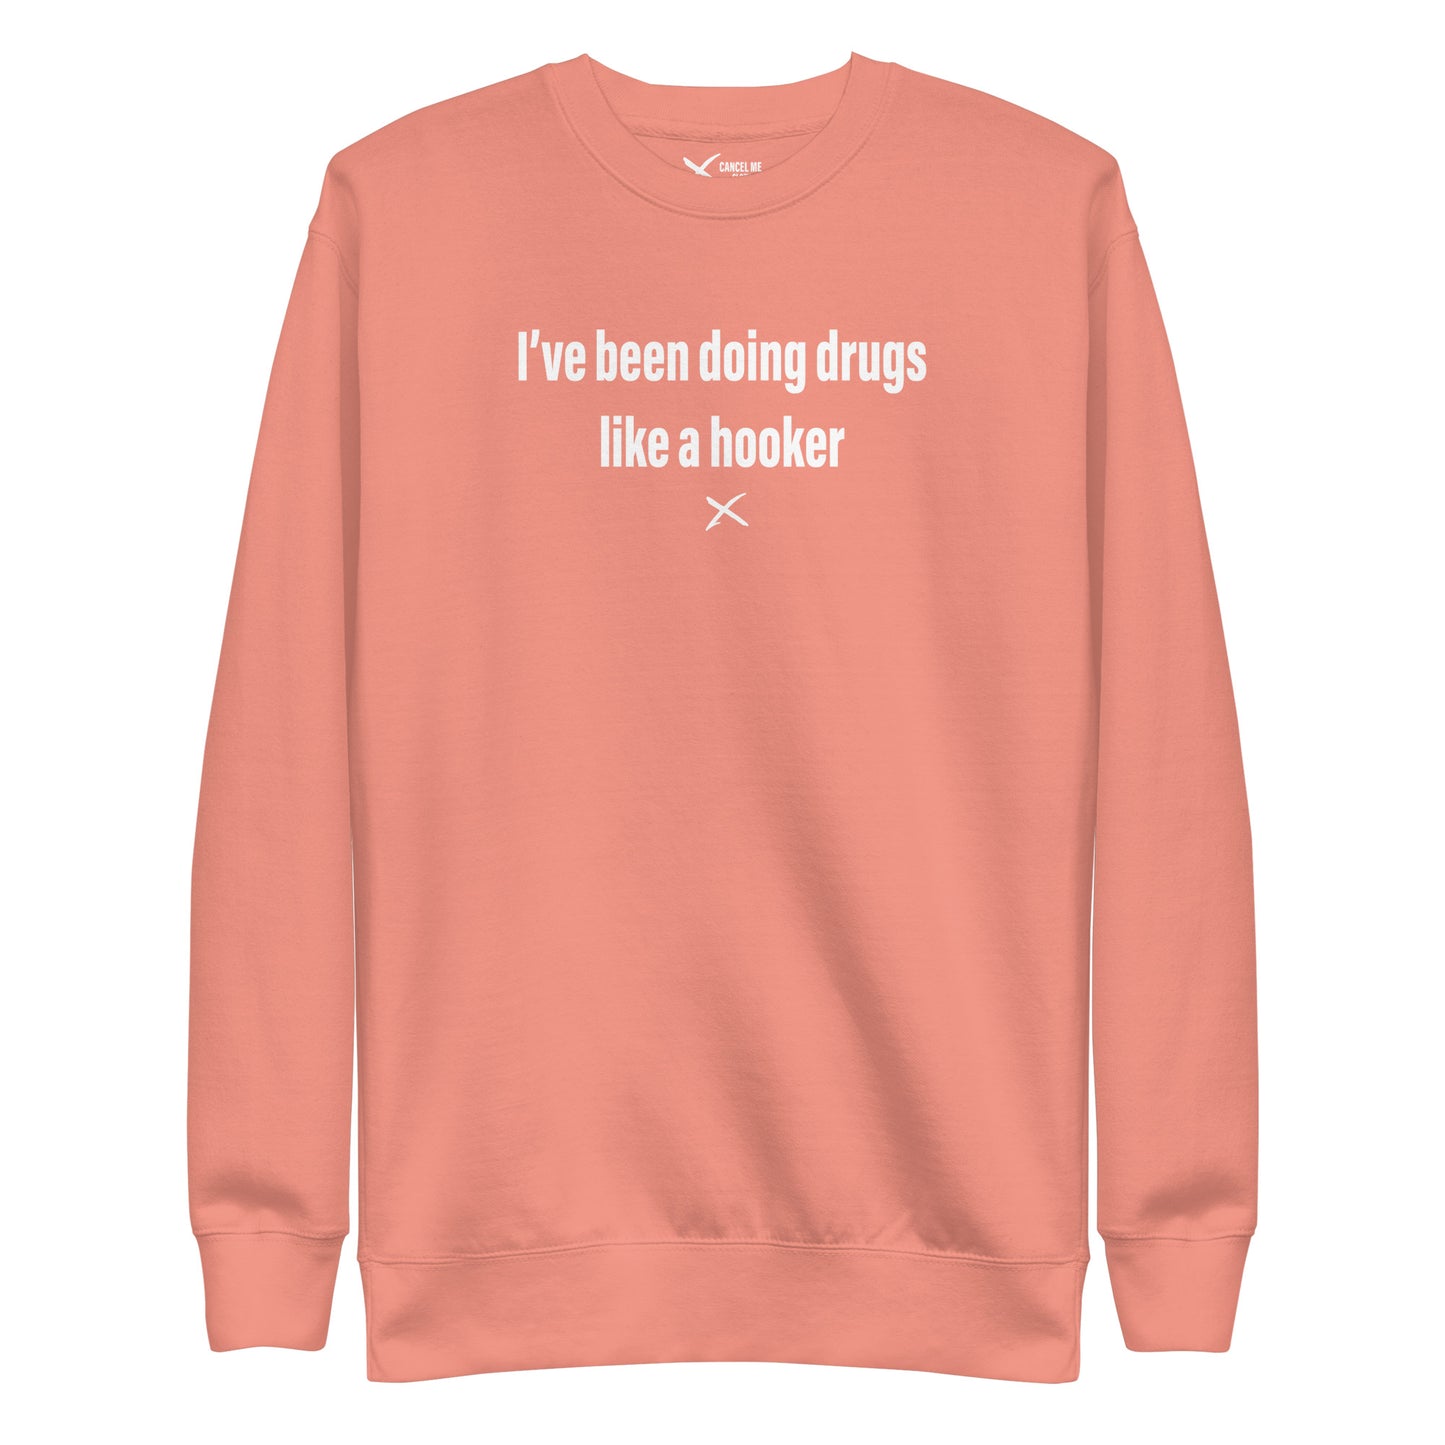 I've been doing drugs like a hooker - Sweatshirt